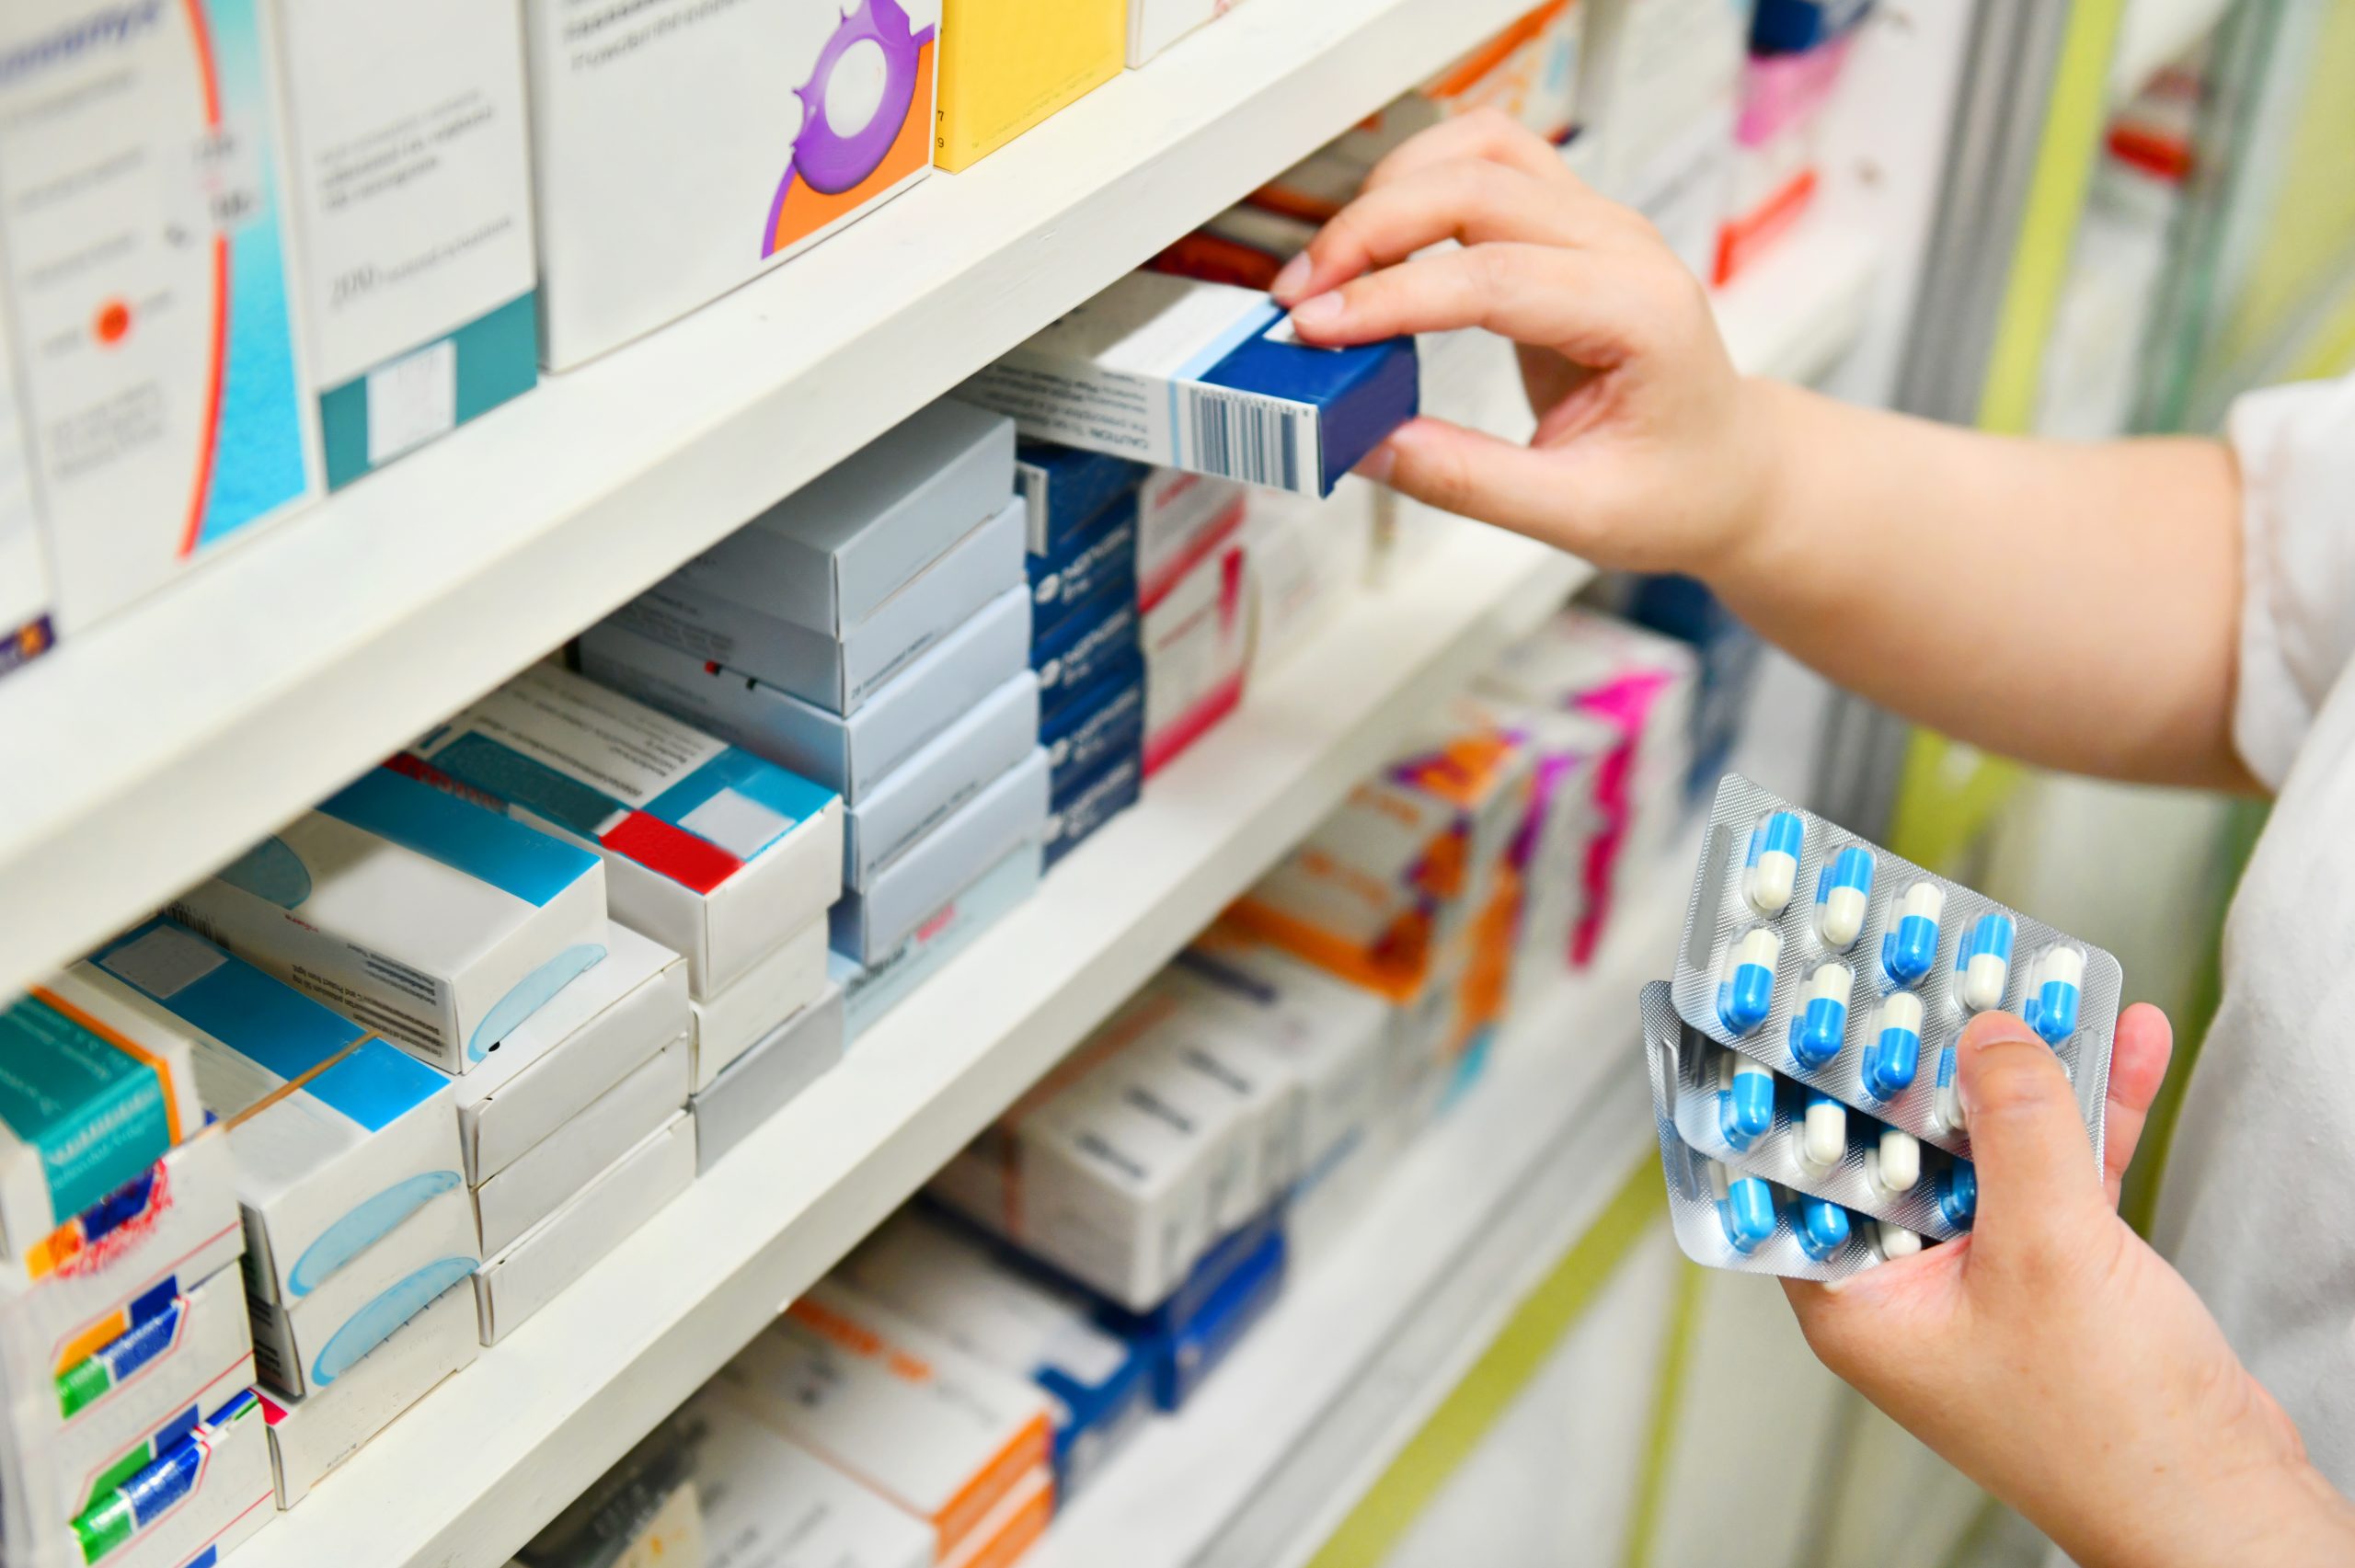 a person pulling medications off a shelf